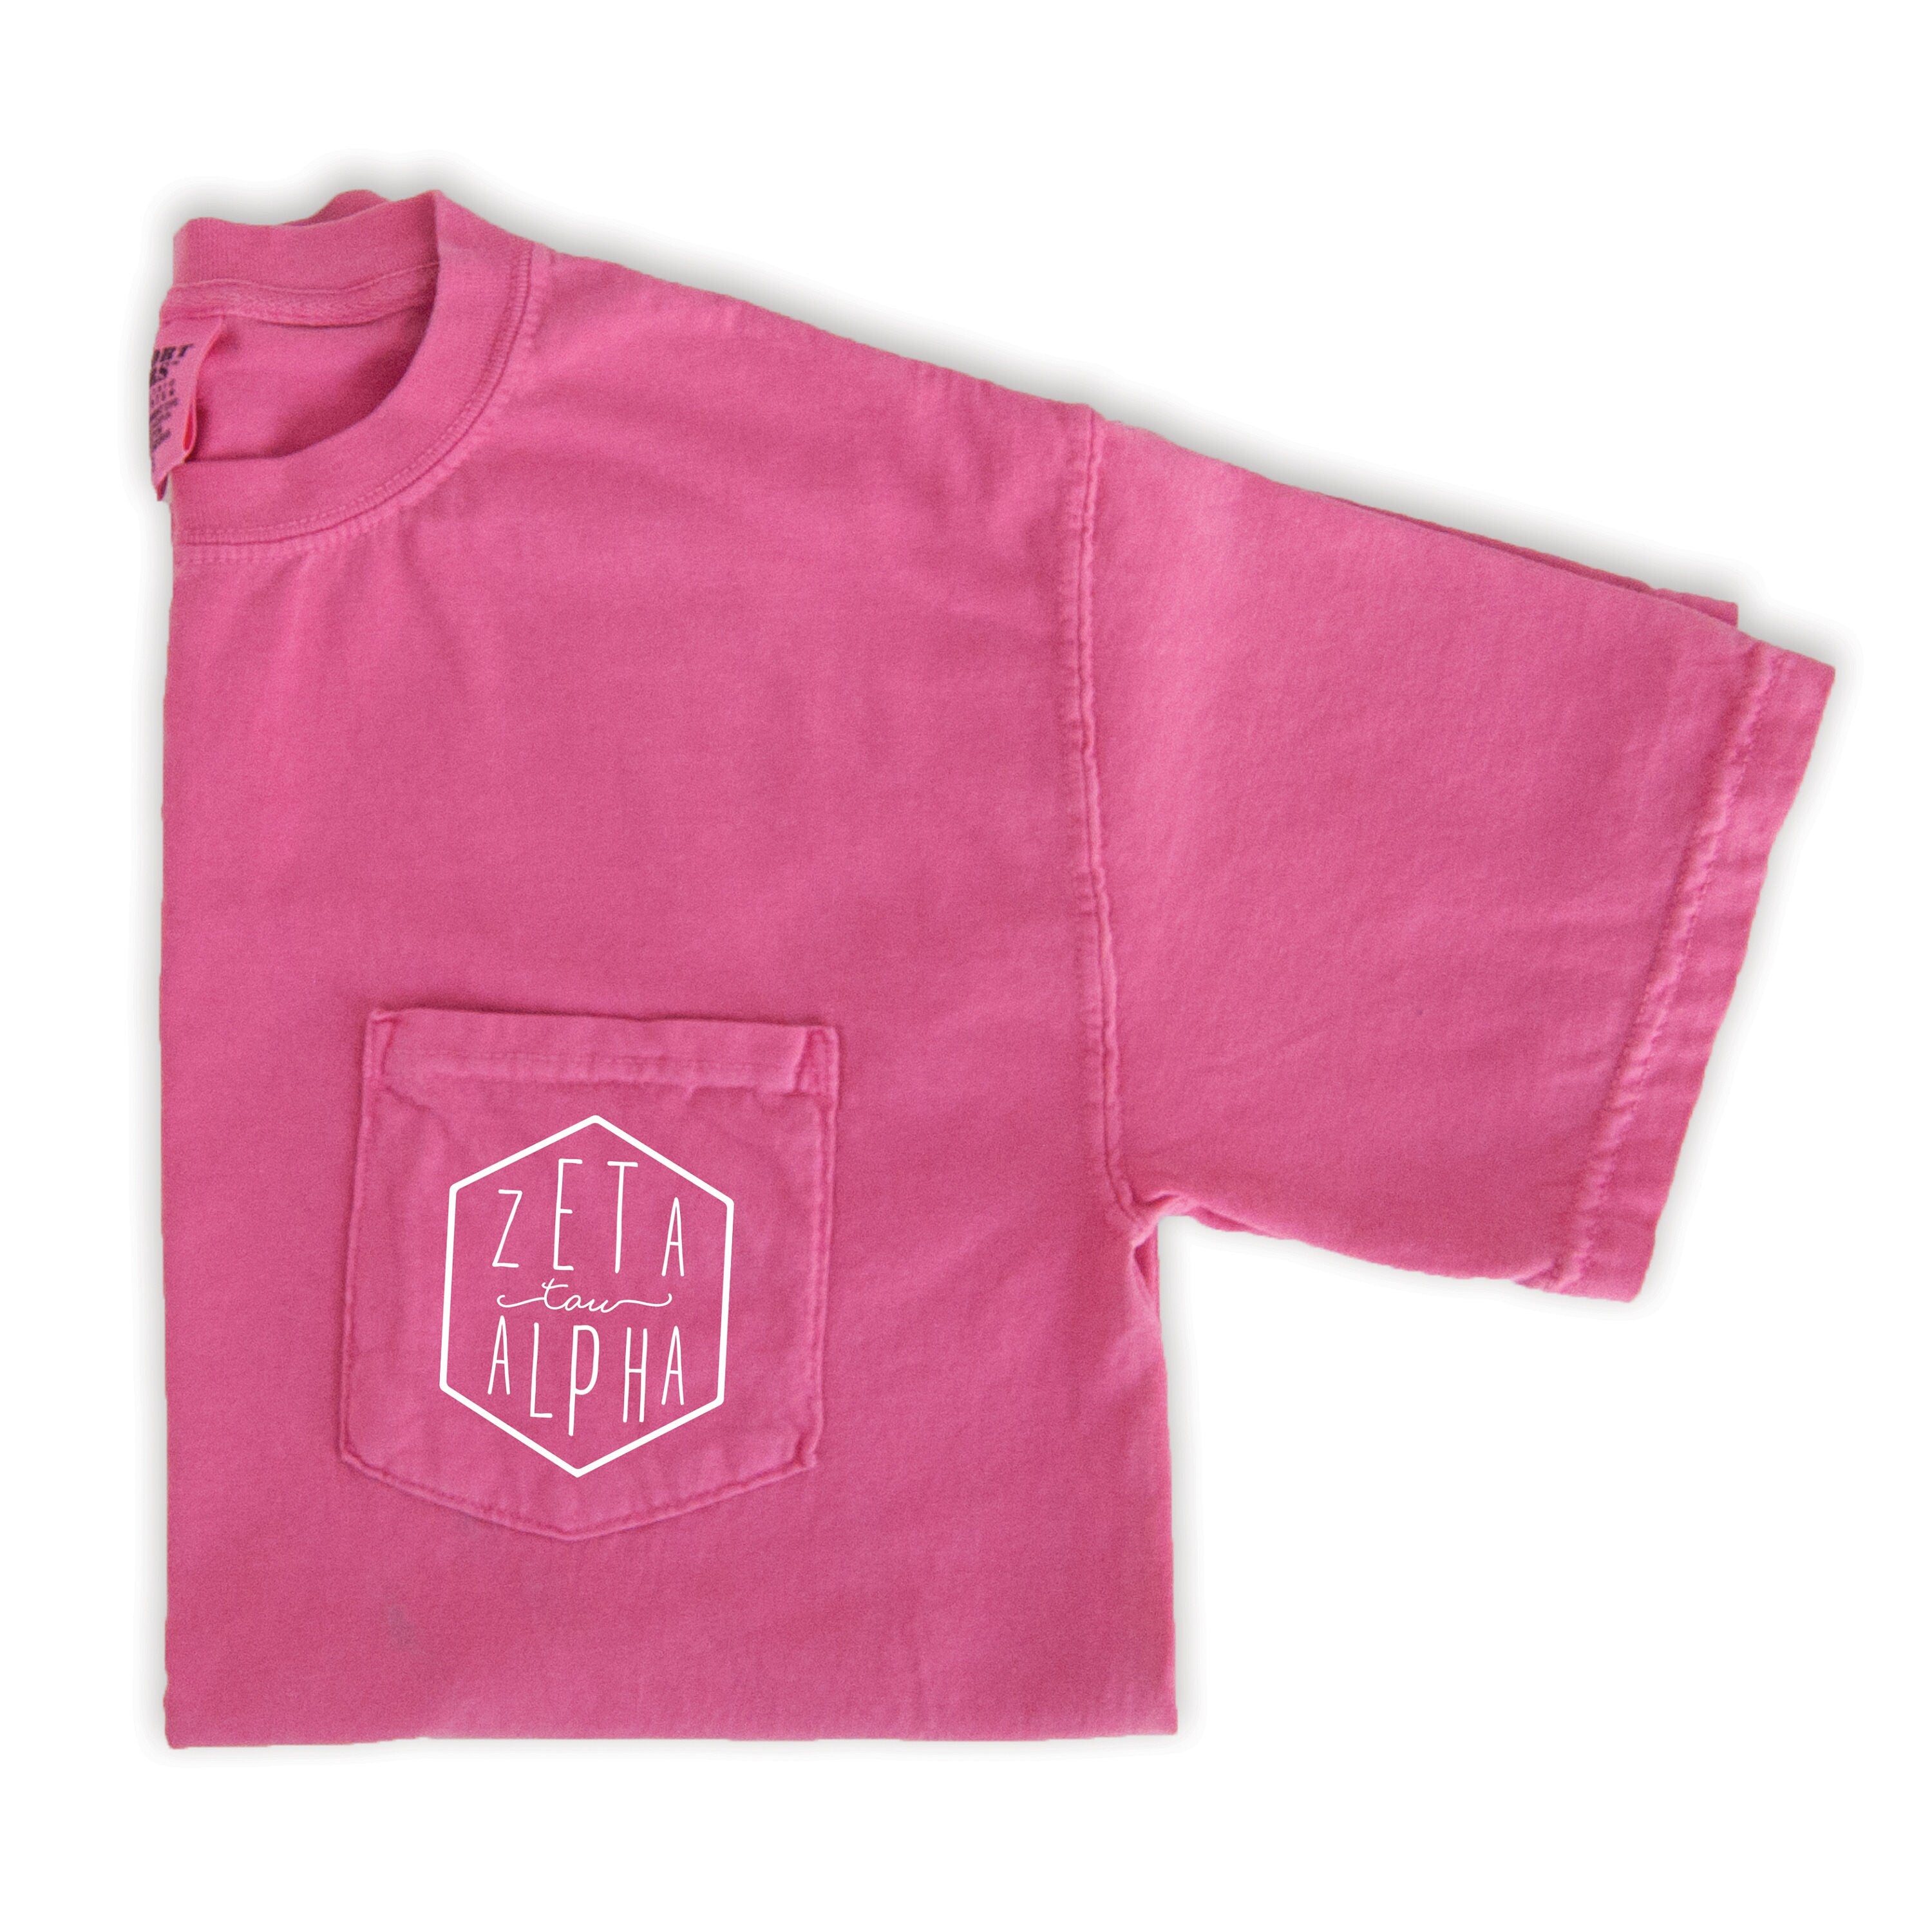 Zeta Tau Alpha Hexagon Pocket Tee - Pink - Go Greek Chic